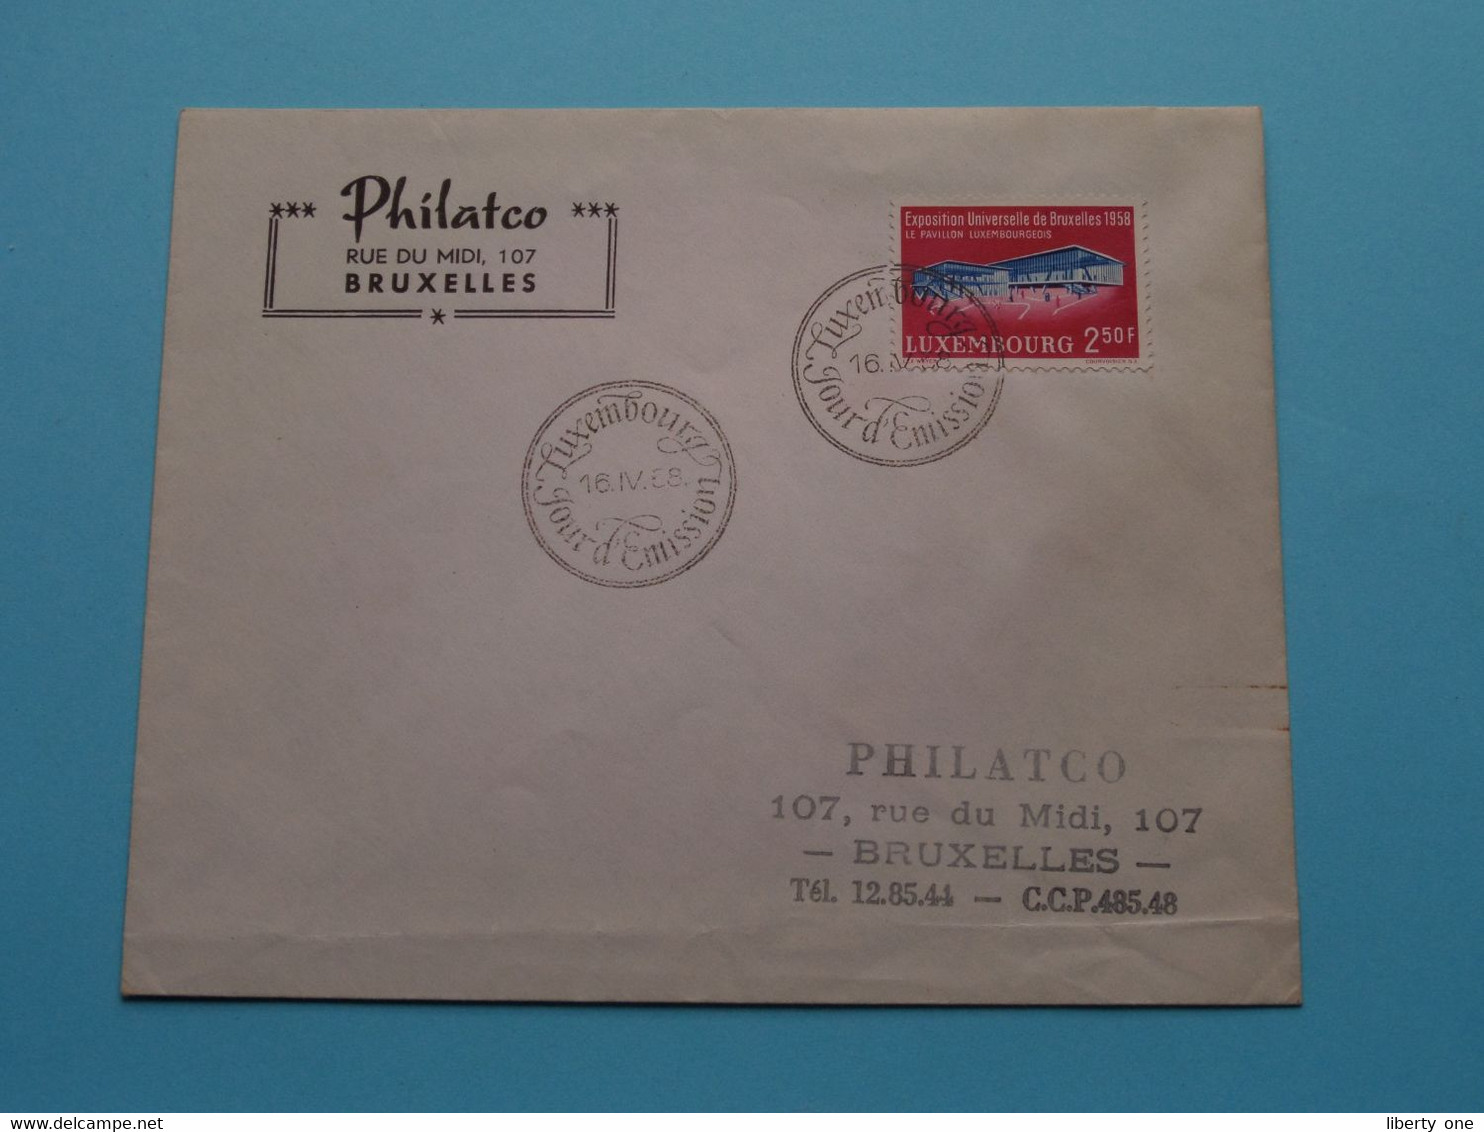 PHILATCO Bruxelles > Philatco ( Enveloppe Pavillon LUXEMBOURG > Expo Bruxelles 1958 ) ! - 1958 – Brussels (Belgium)